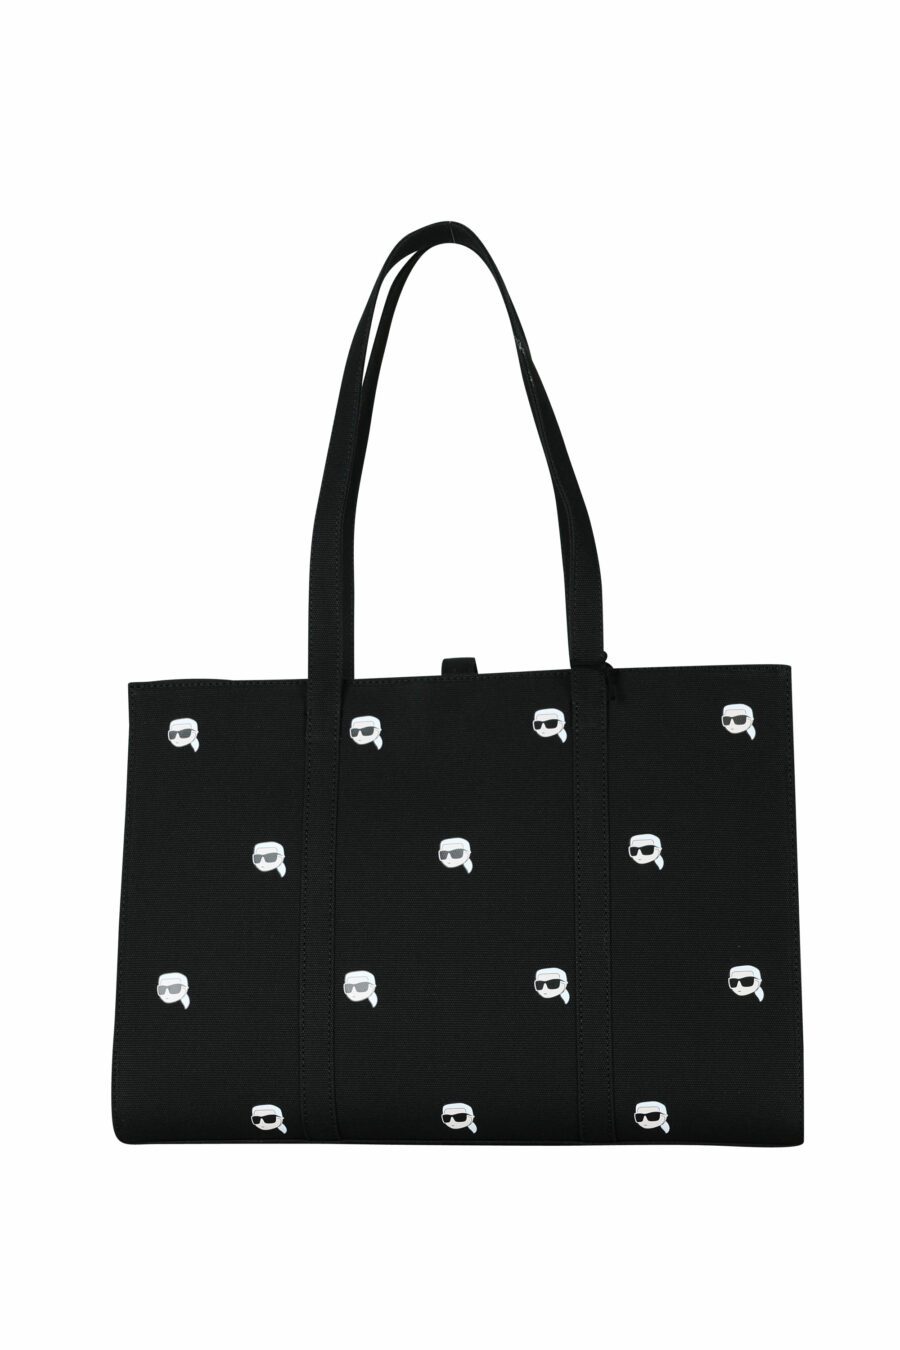 Tote bag negra "all over logo karl" - 8720744818144 2